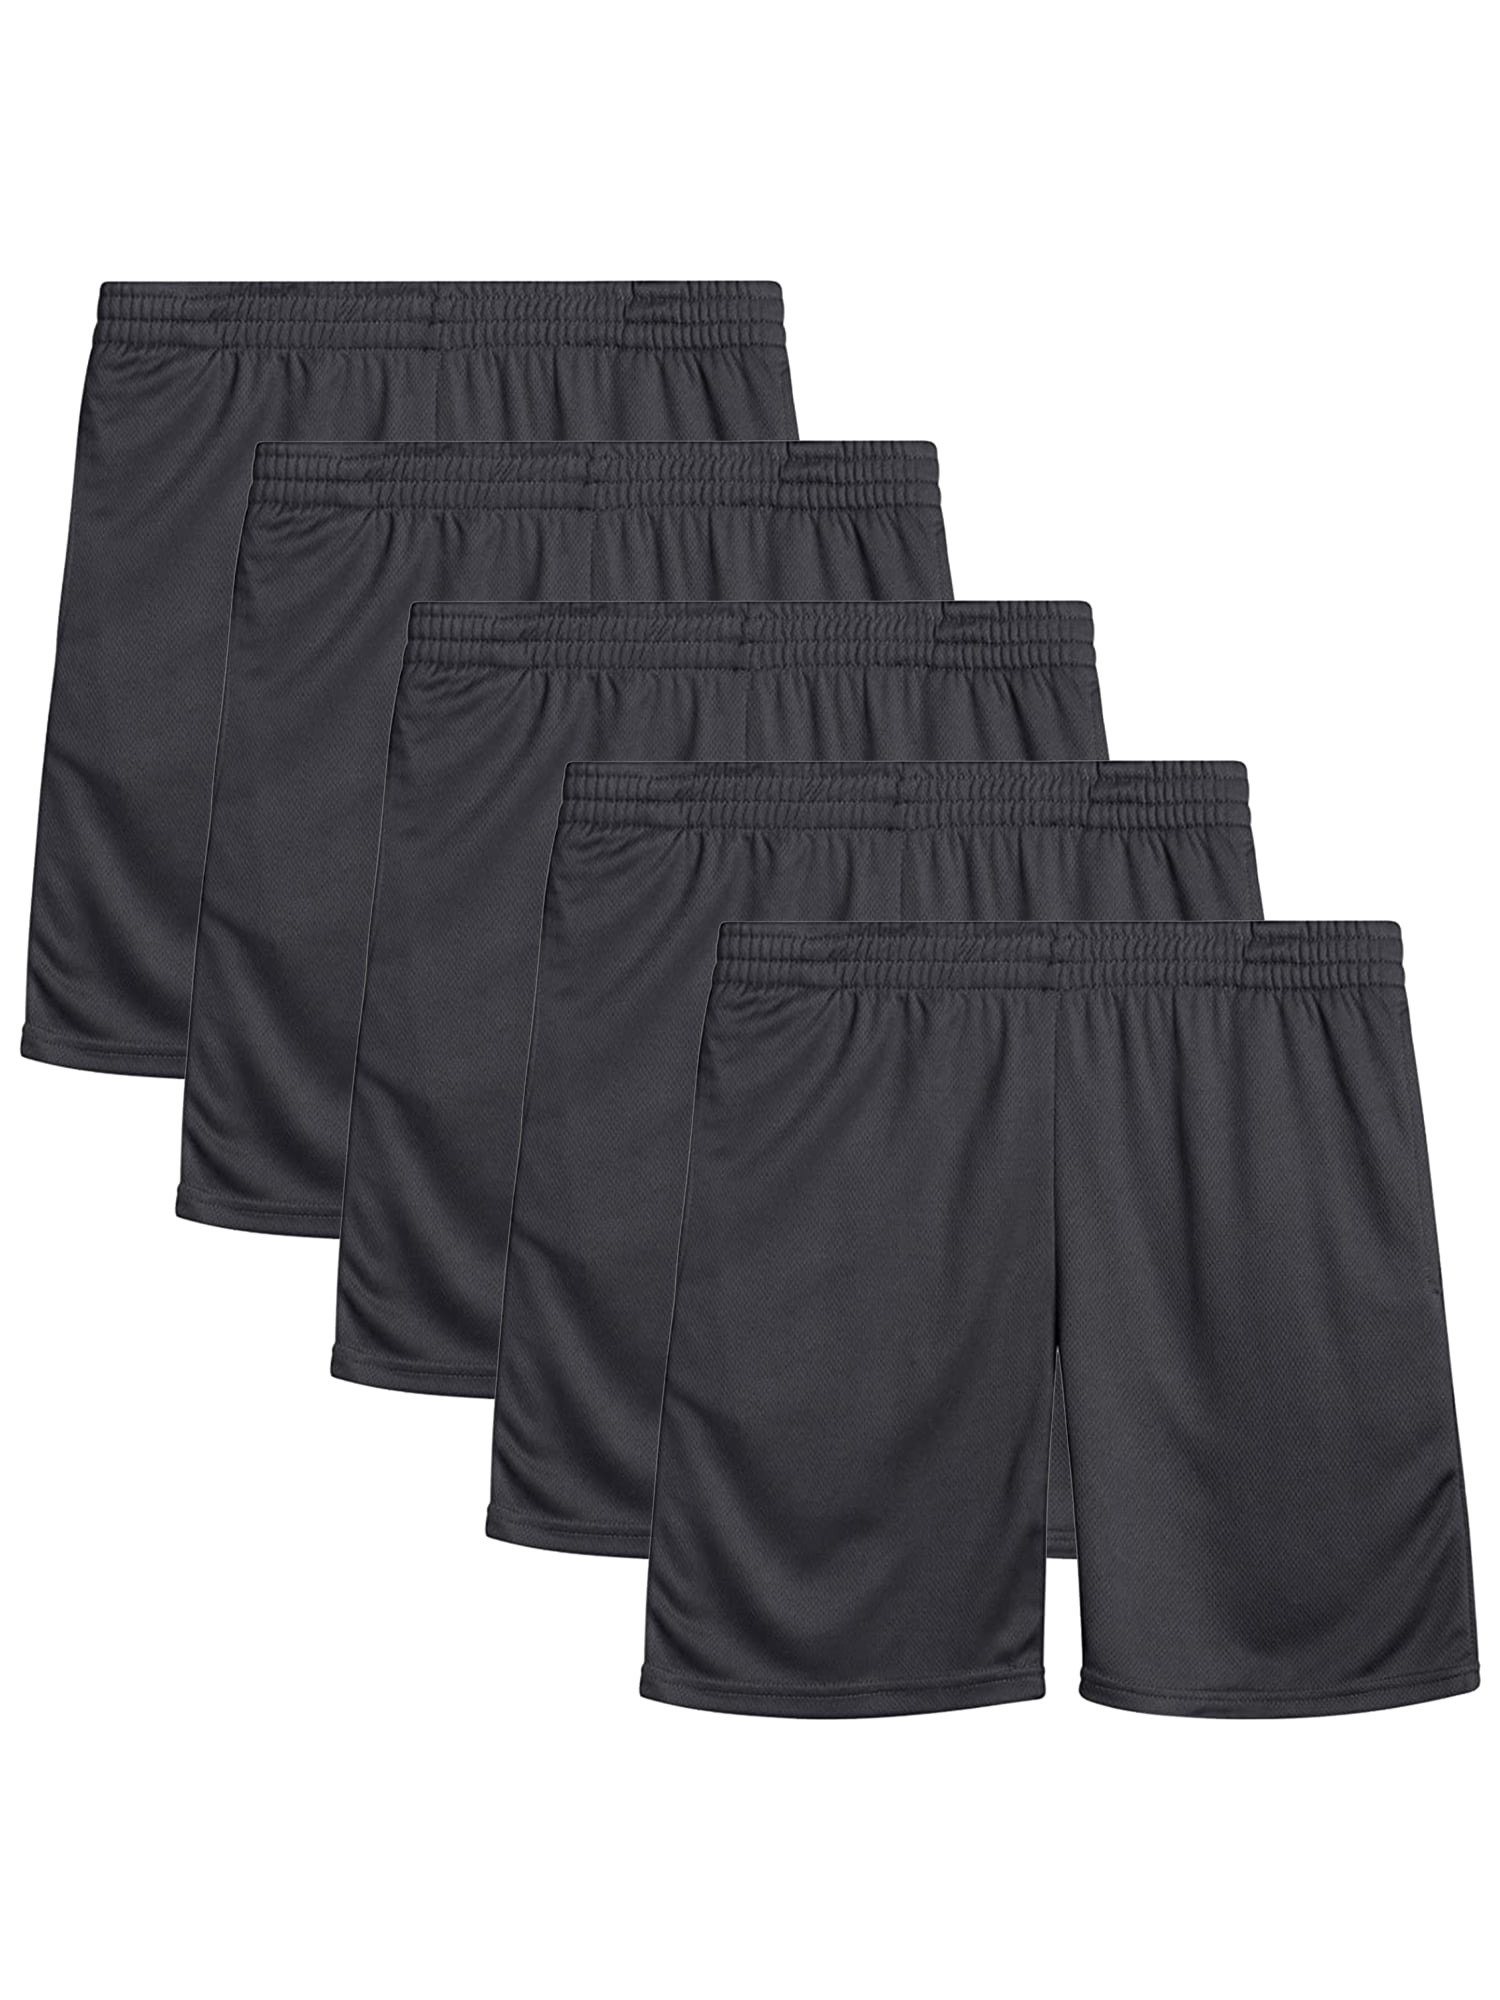 NBA boys Black Athletic Shorts Size Large - beyond exchange